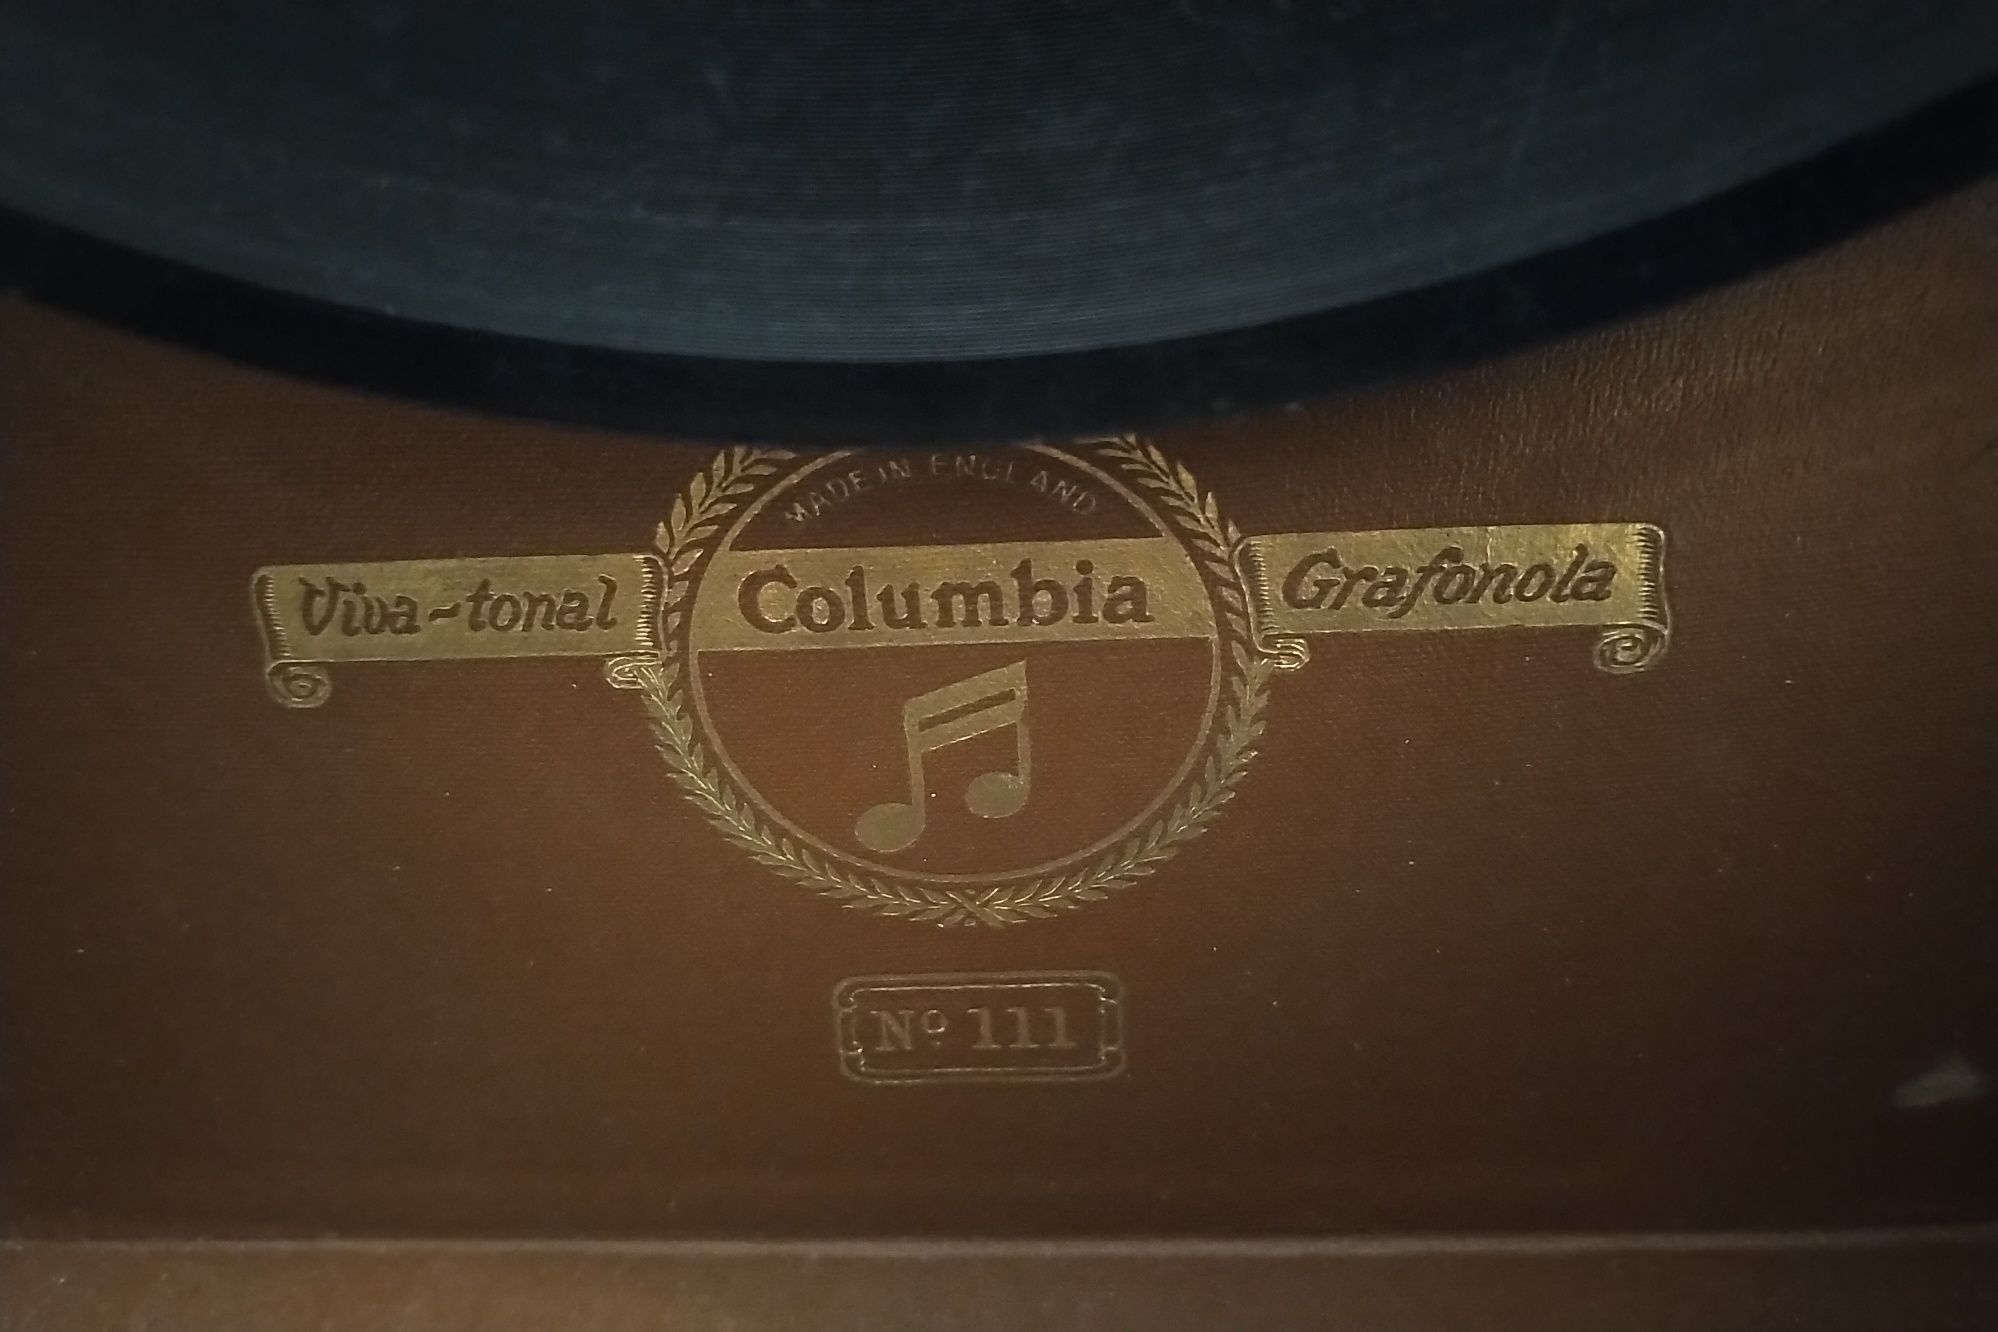 Vintage Gramophone Portable Columbia Viva-Tonal Grafanola No 111